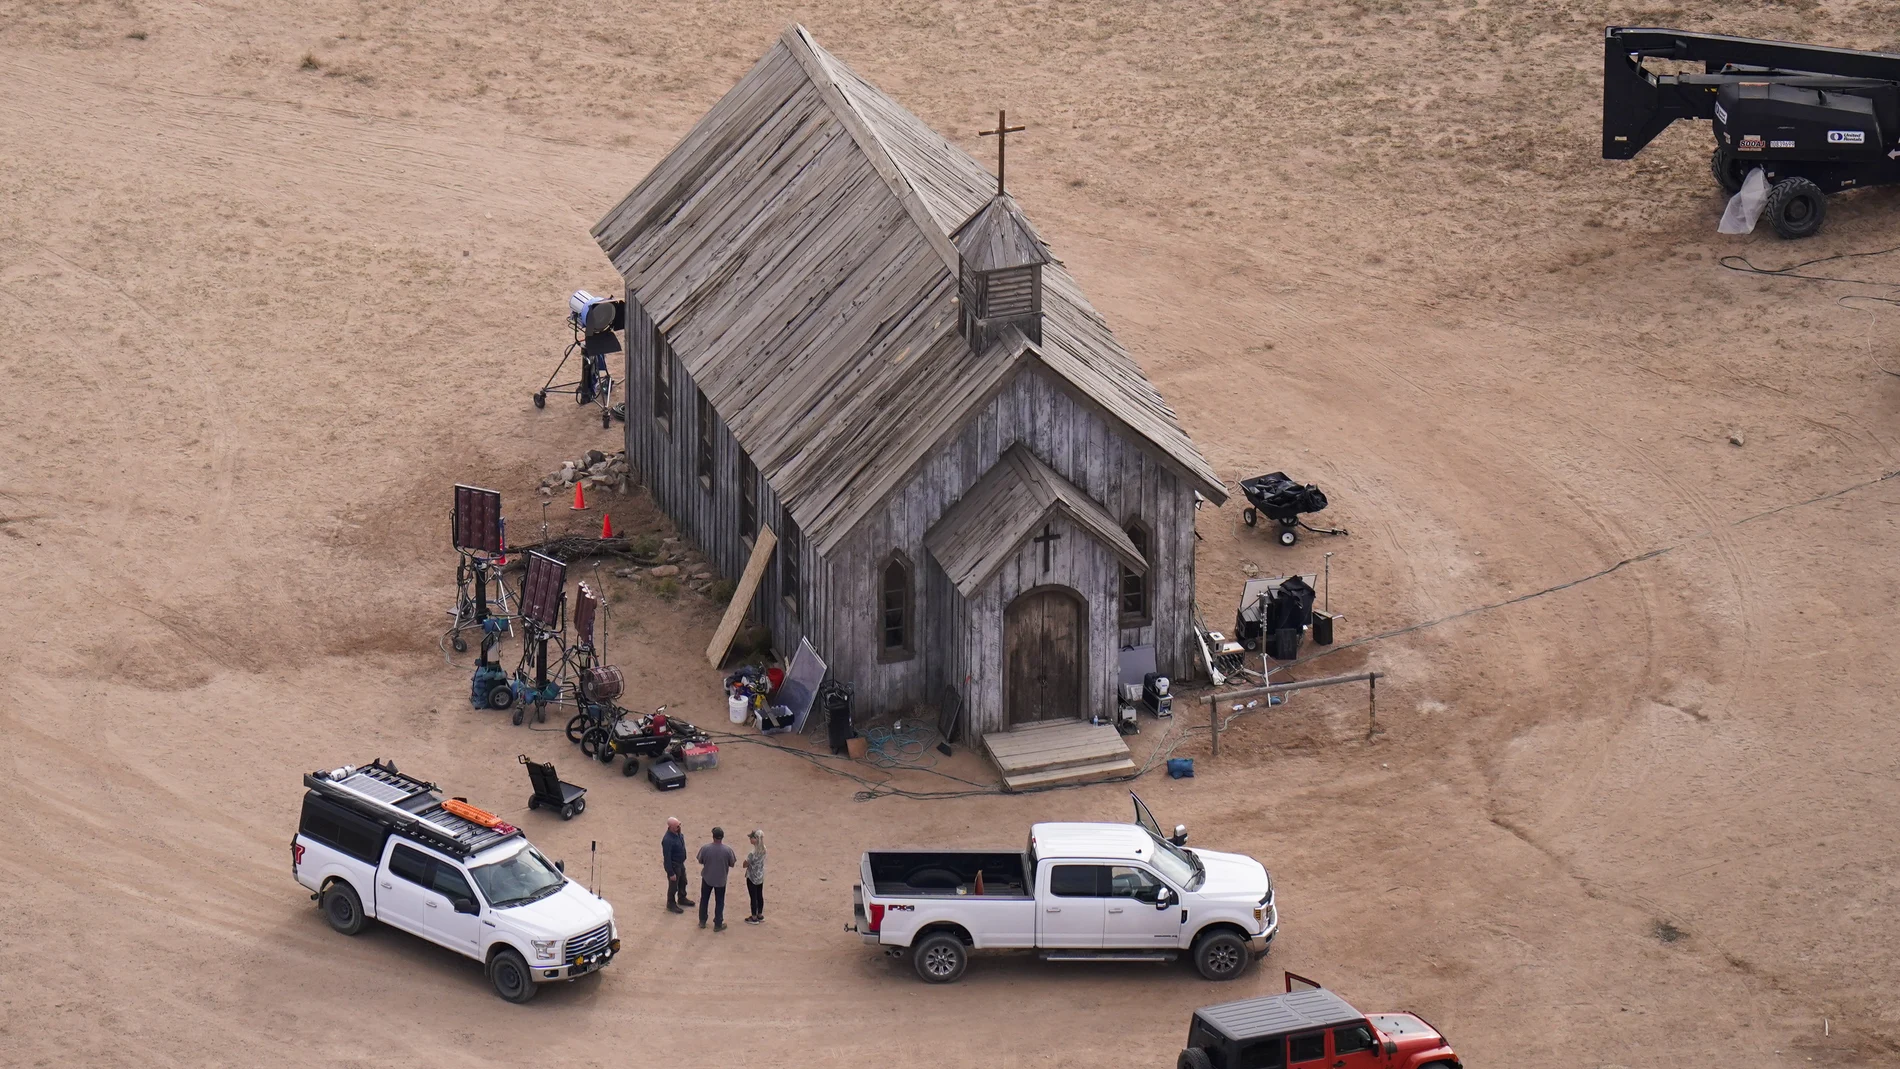 Imagen aérea del set de rodaje de "Rust", película protagonizada por Alec Baldwin